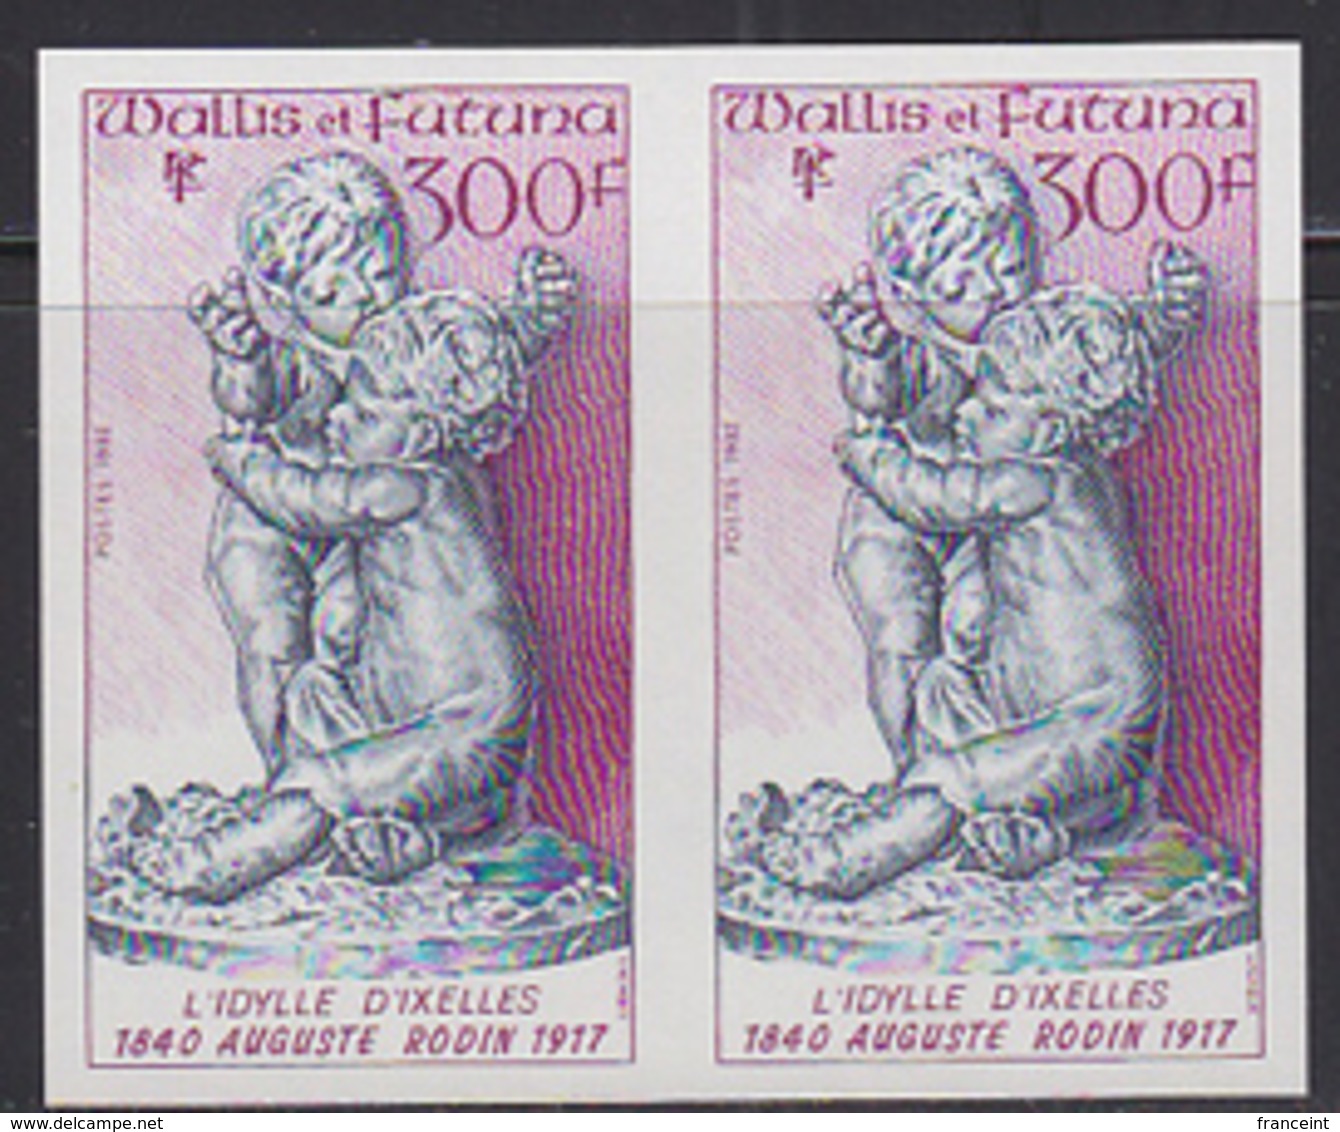 WALLIS & FUTUNA (1992) L'Idylle D'ixelles By Rodin. Imperforate Pair. Scott No 438, Yvert No 442. - Imperforates, Proofs & Errors